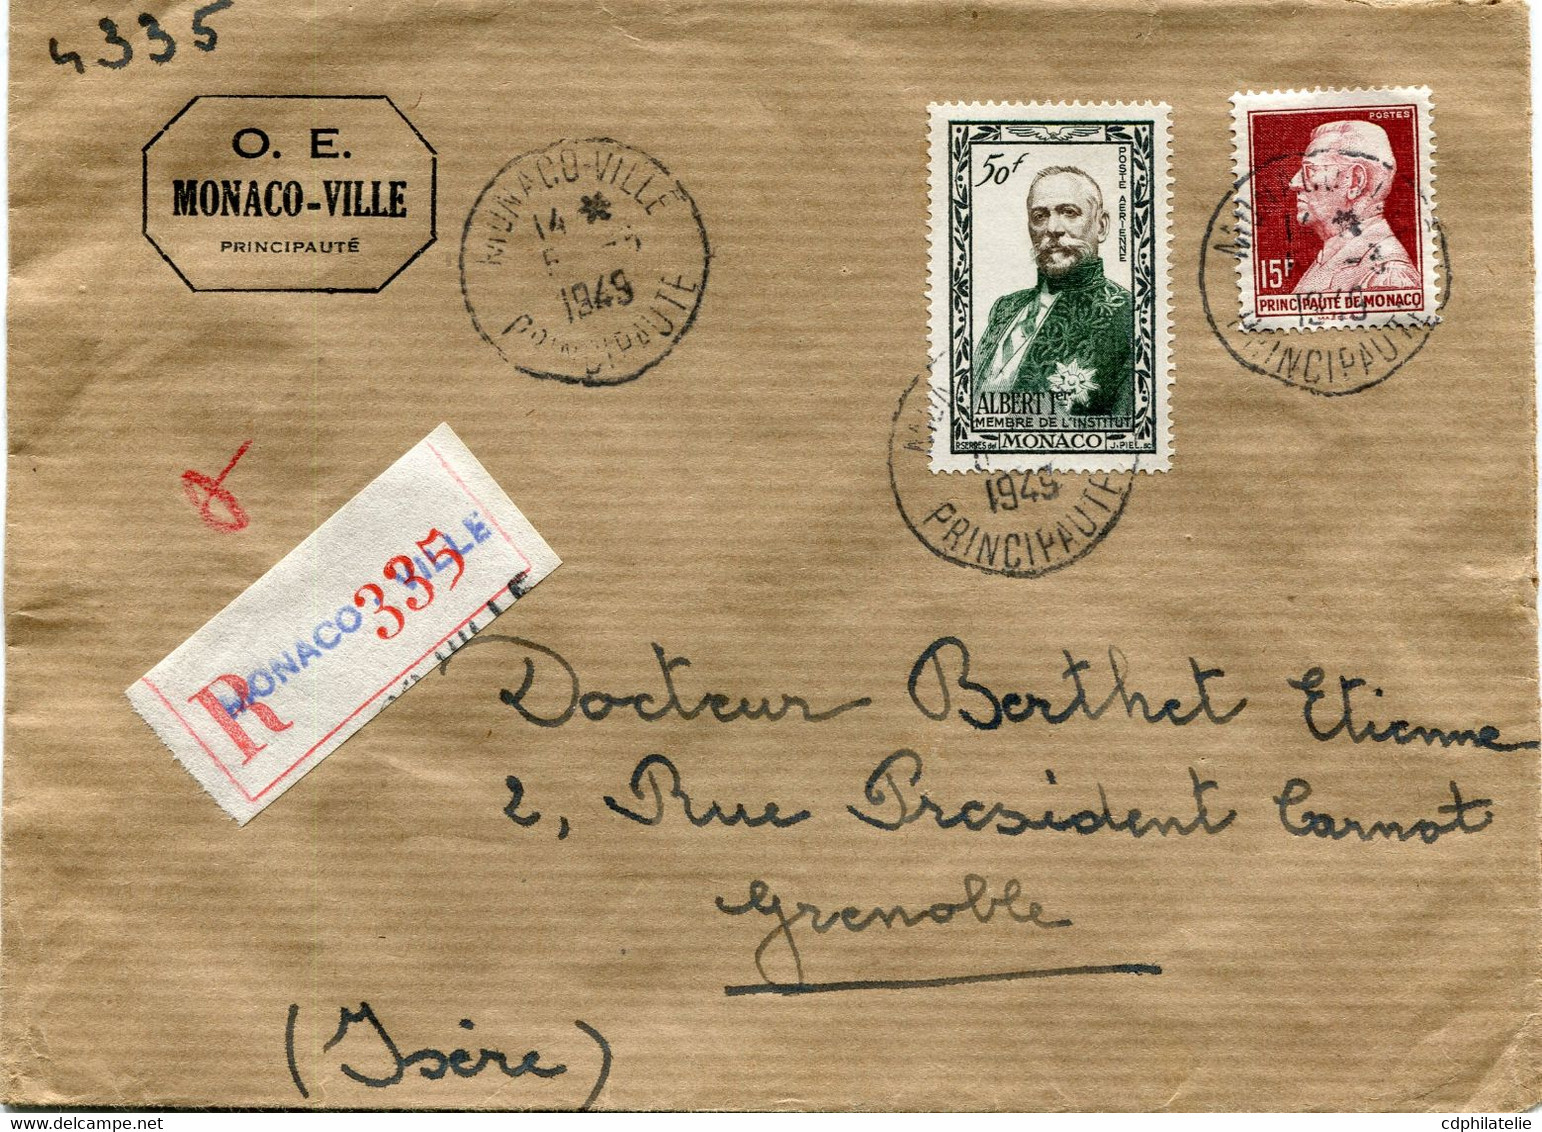 MONACO LETTRE RECOMMANDEE DEPART MONACO - VILLE 5-3-1949 PRINCIPAUTE POUR LA FRANCE - Storia Postale